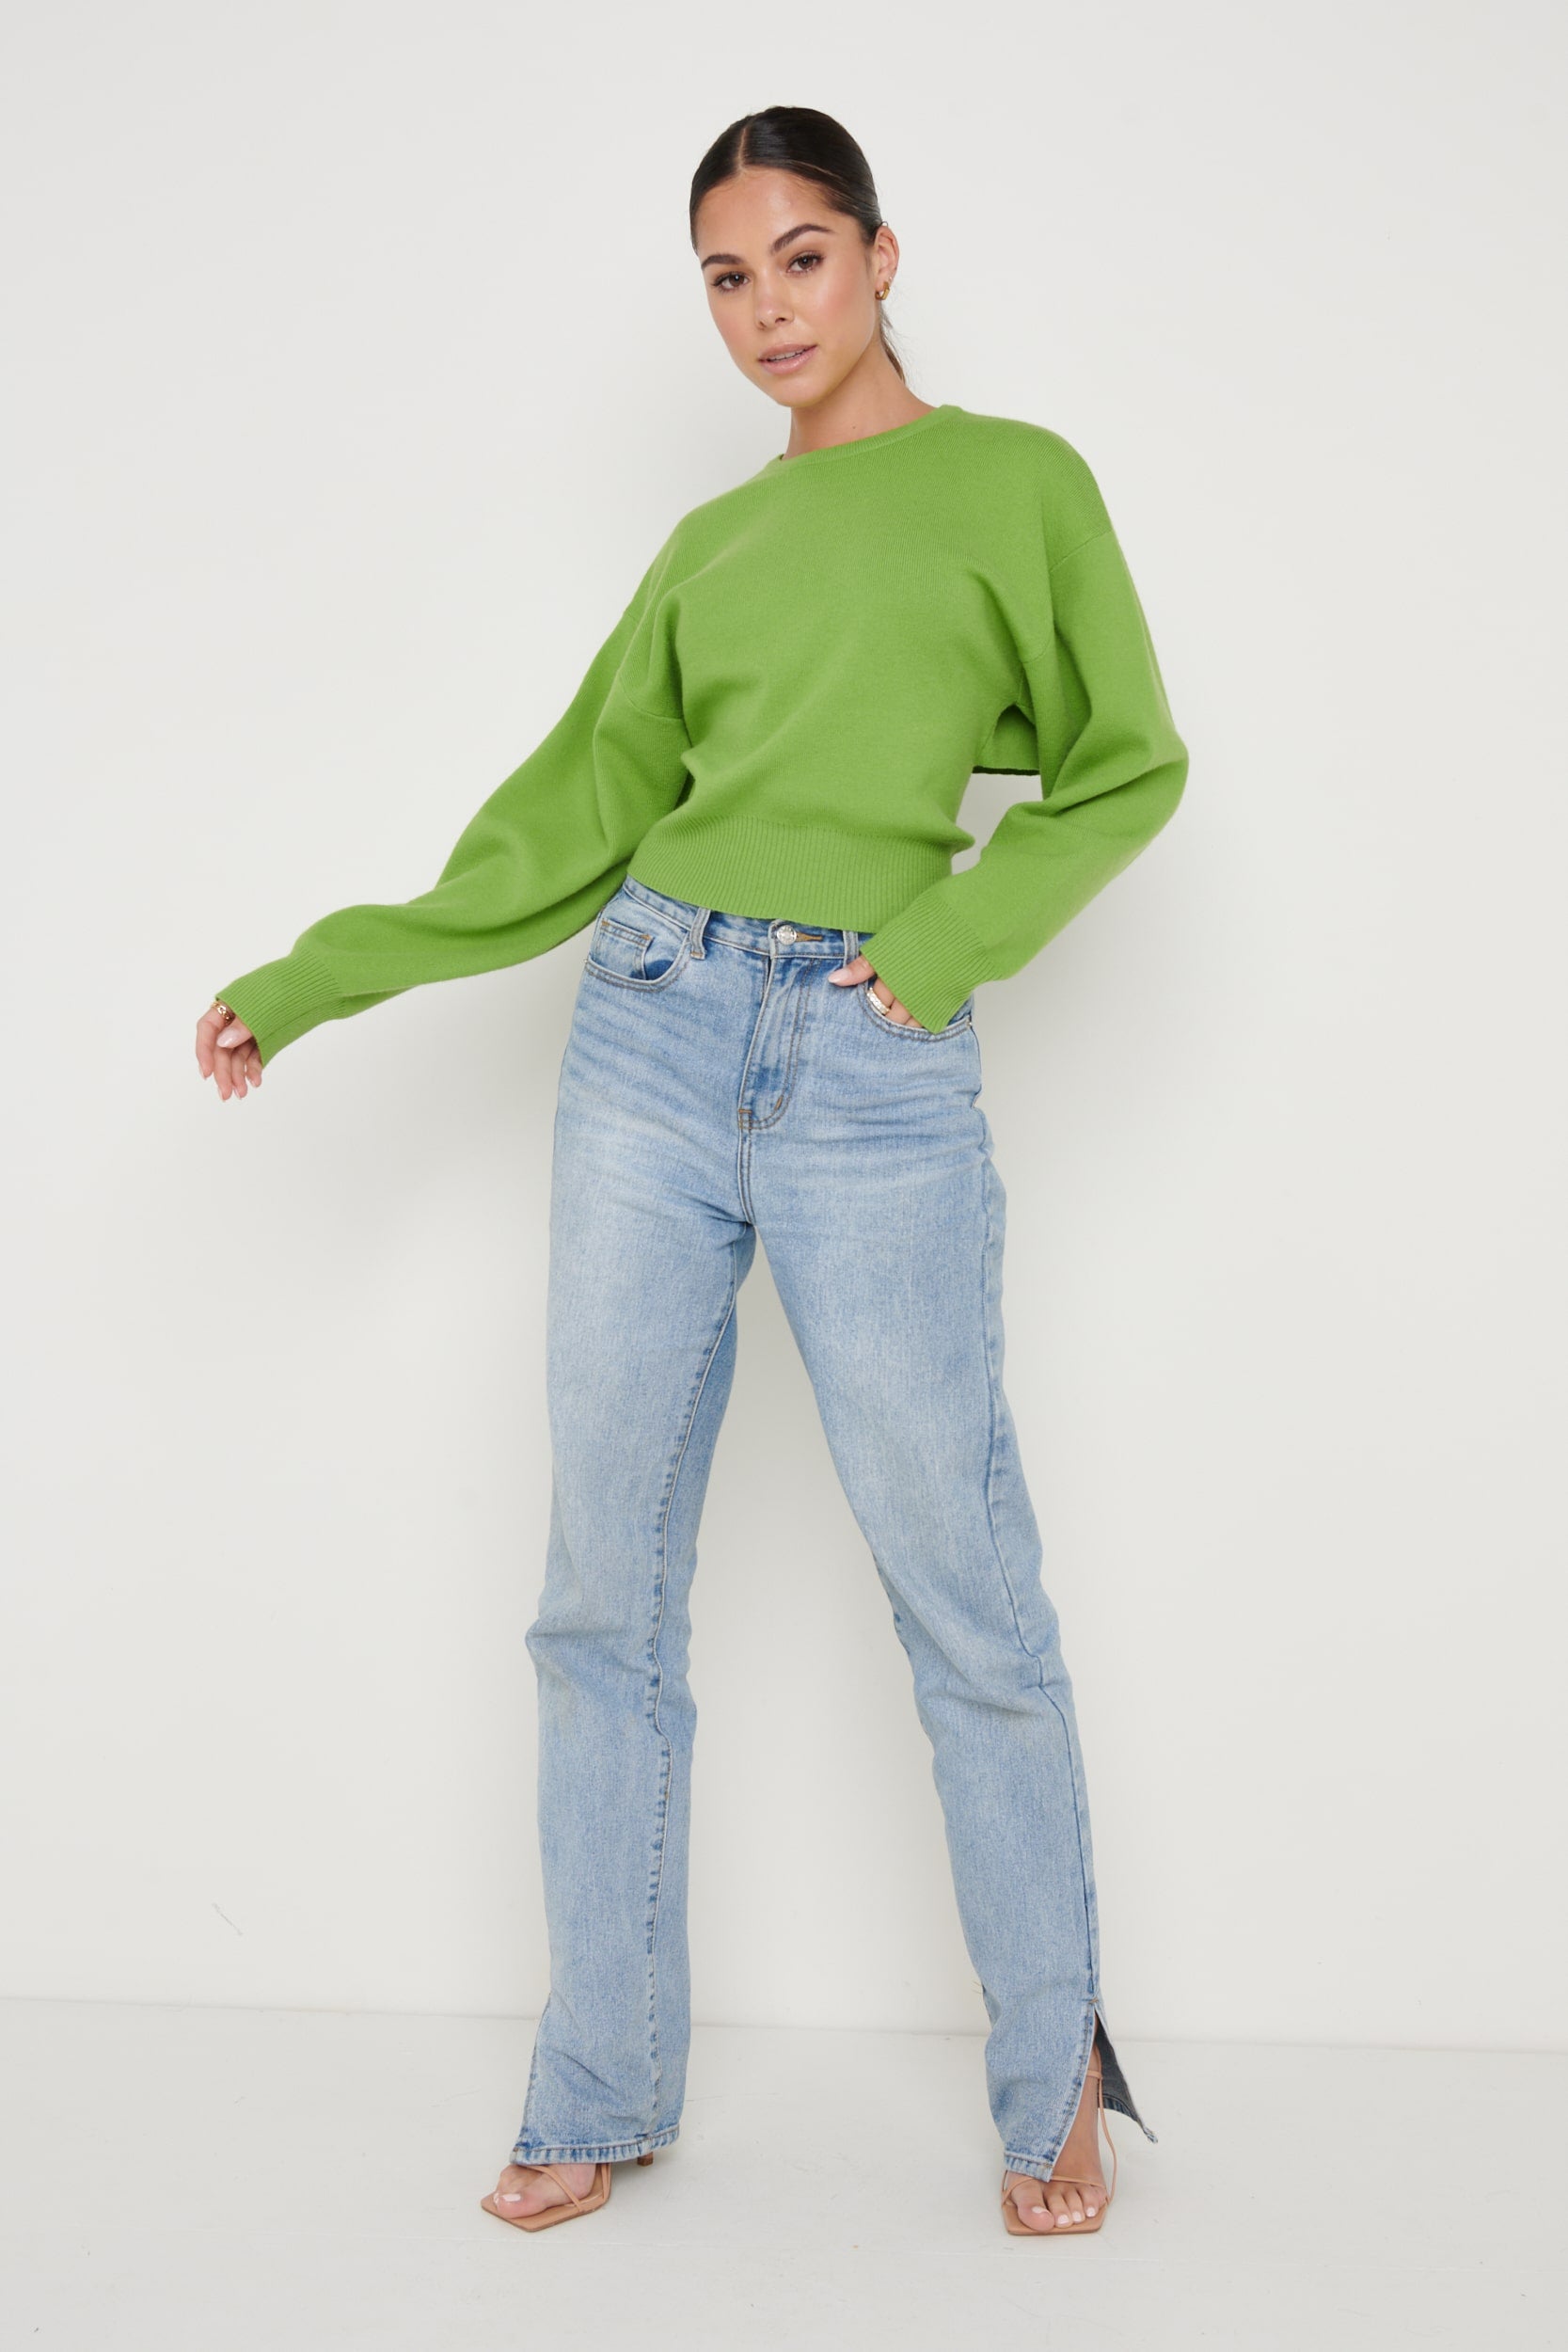 Nola Knitted Tie Back Jumper - Apple Green